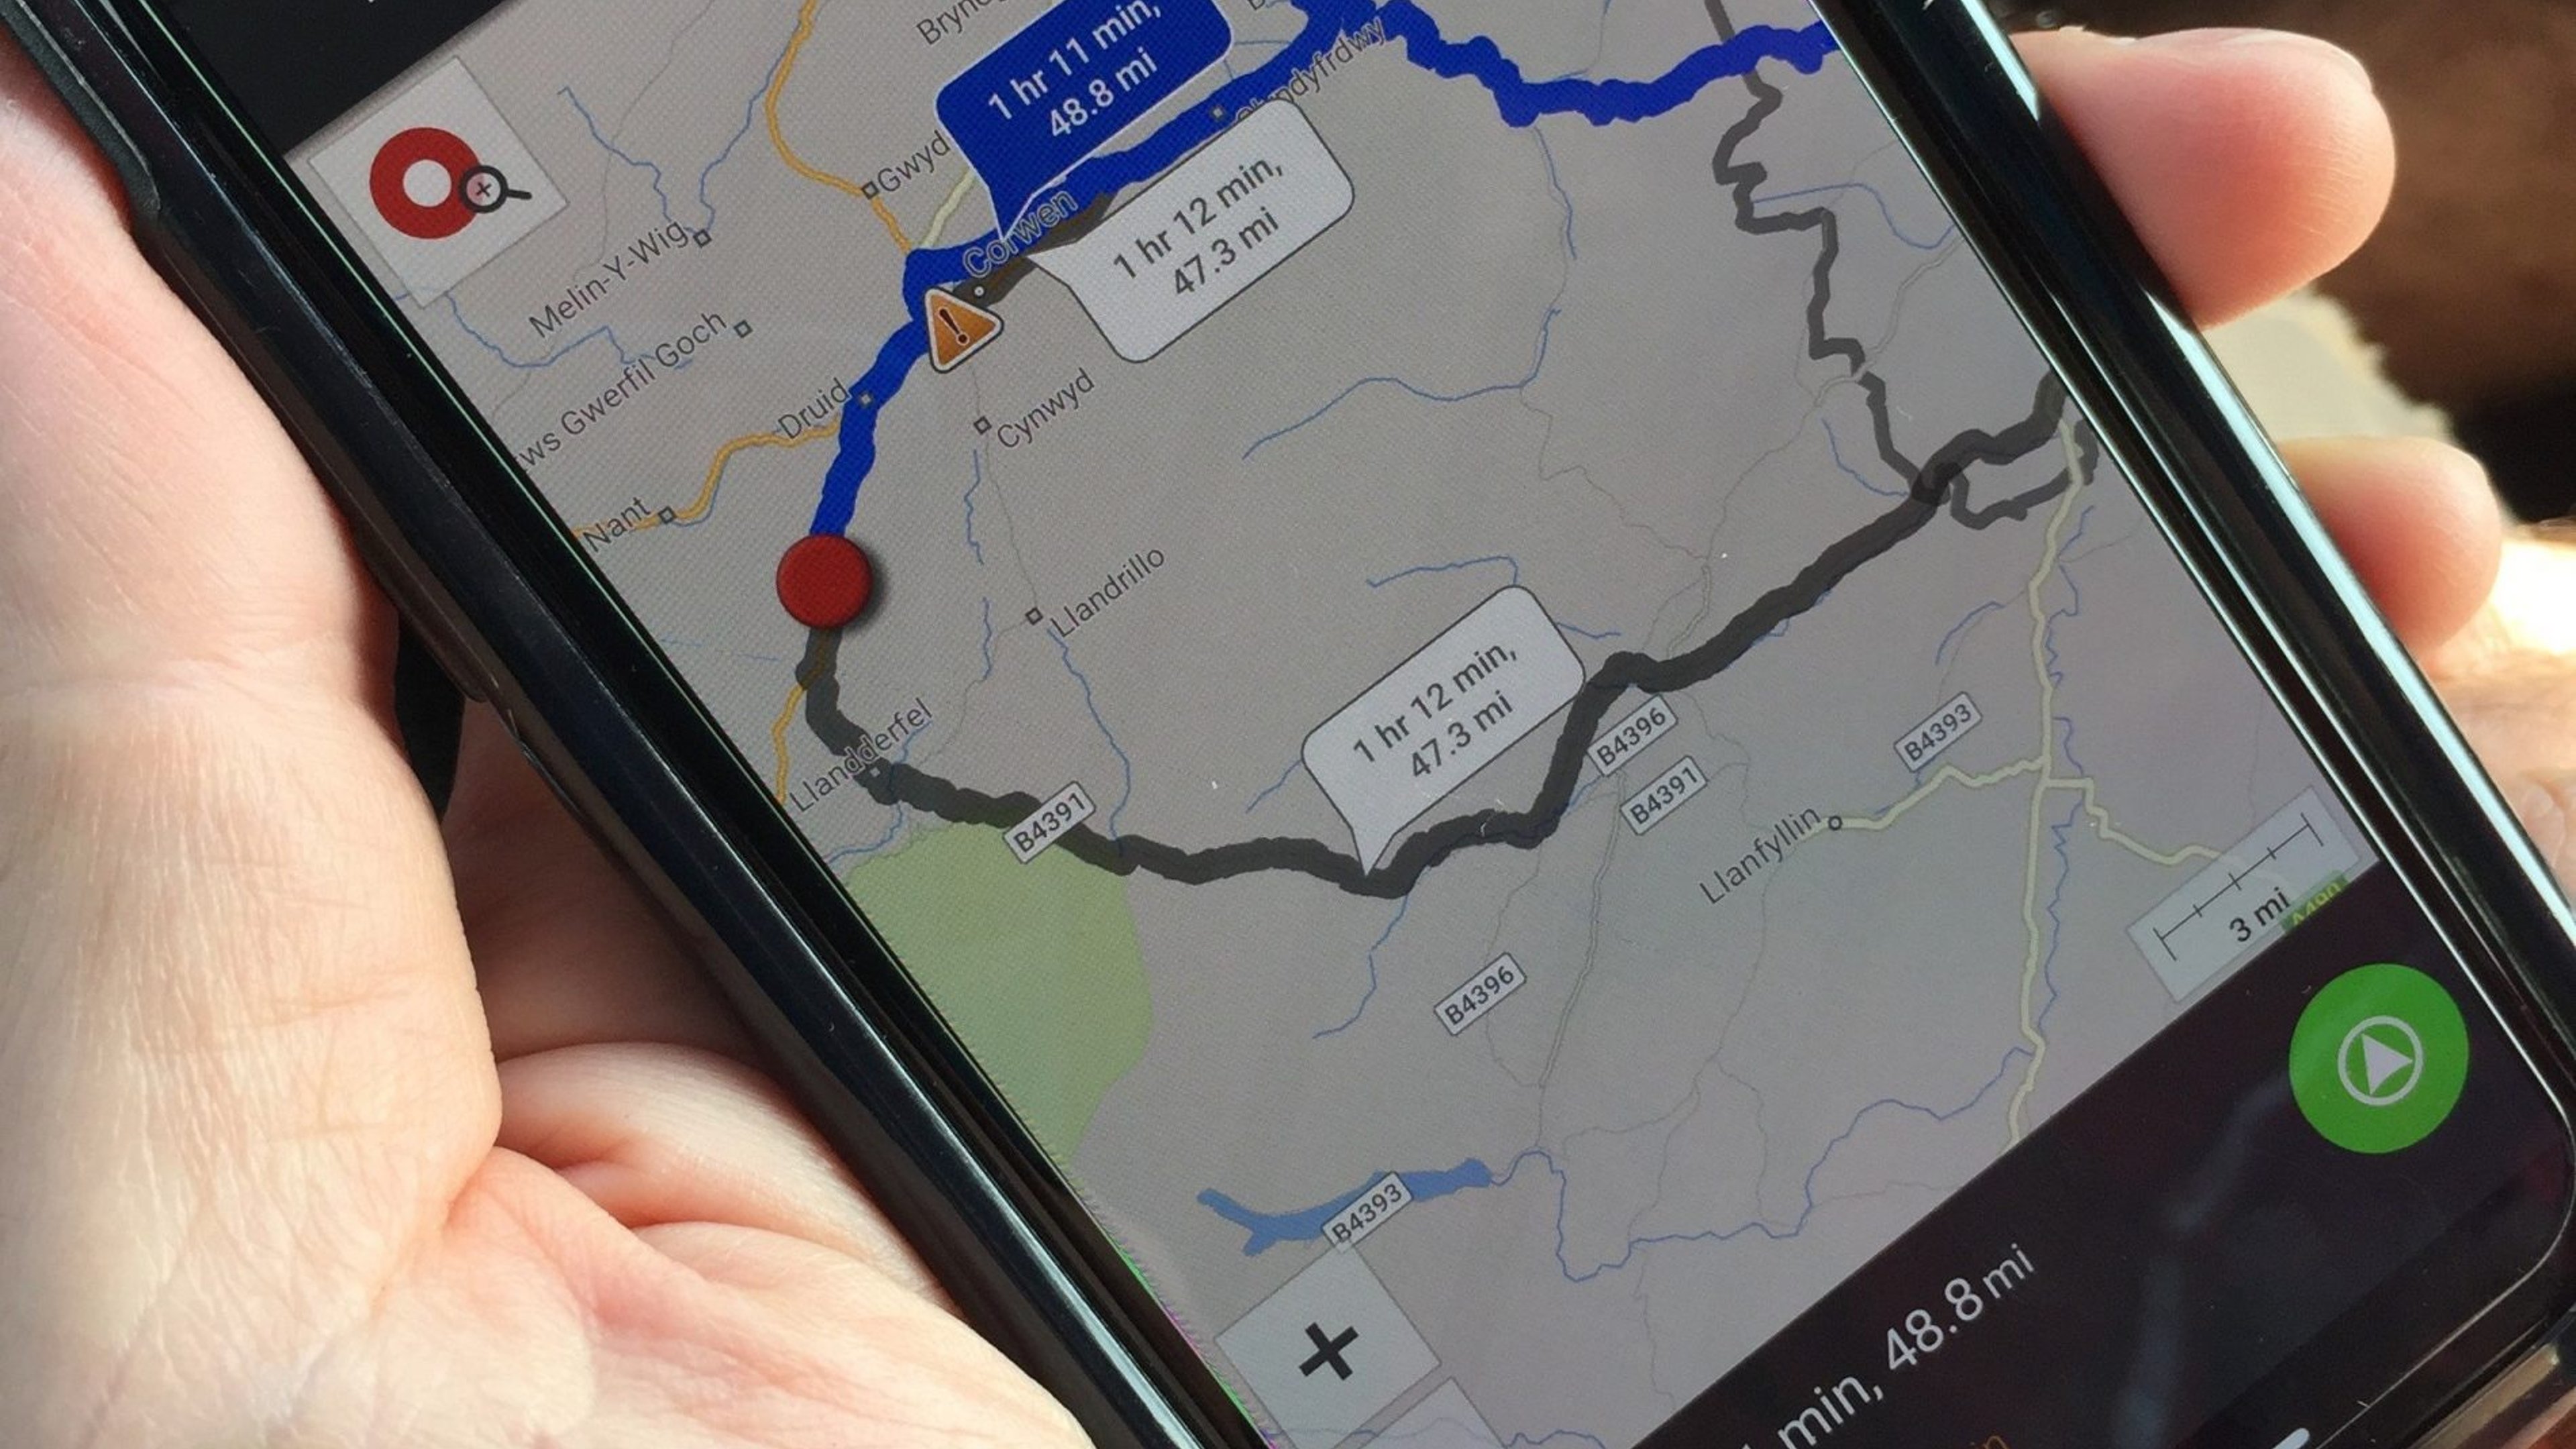 Using the CoPilot GPS App